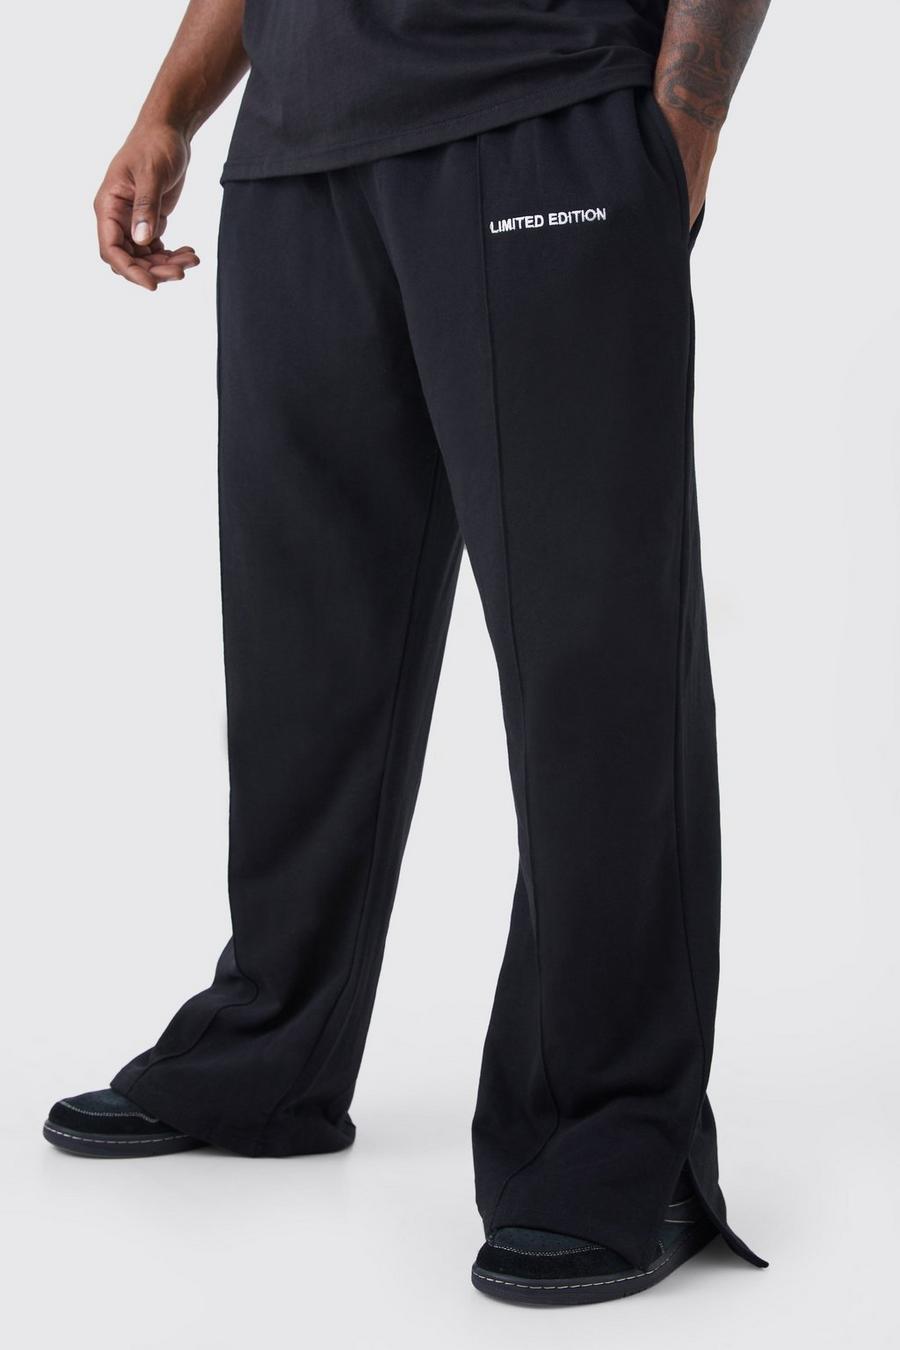 Pantaloni tuta pesanti Plus Size rilassati con spacco sul fondo, Black image number 1